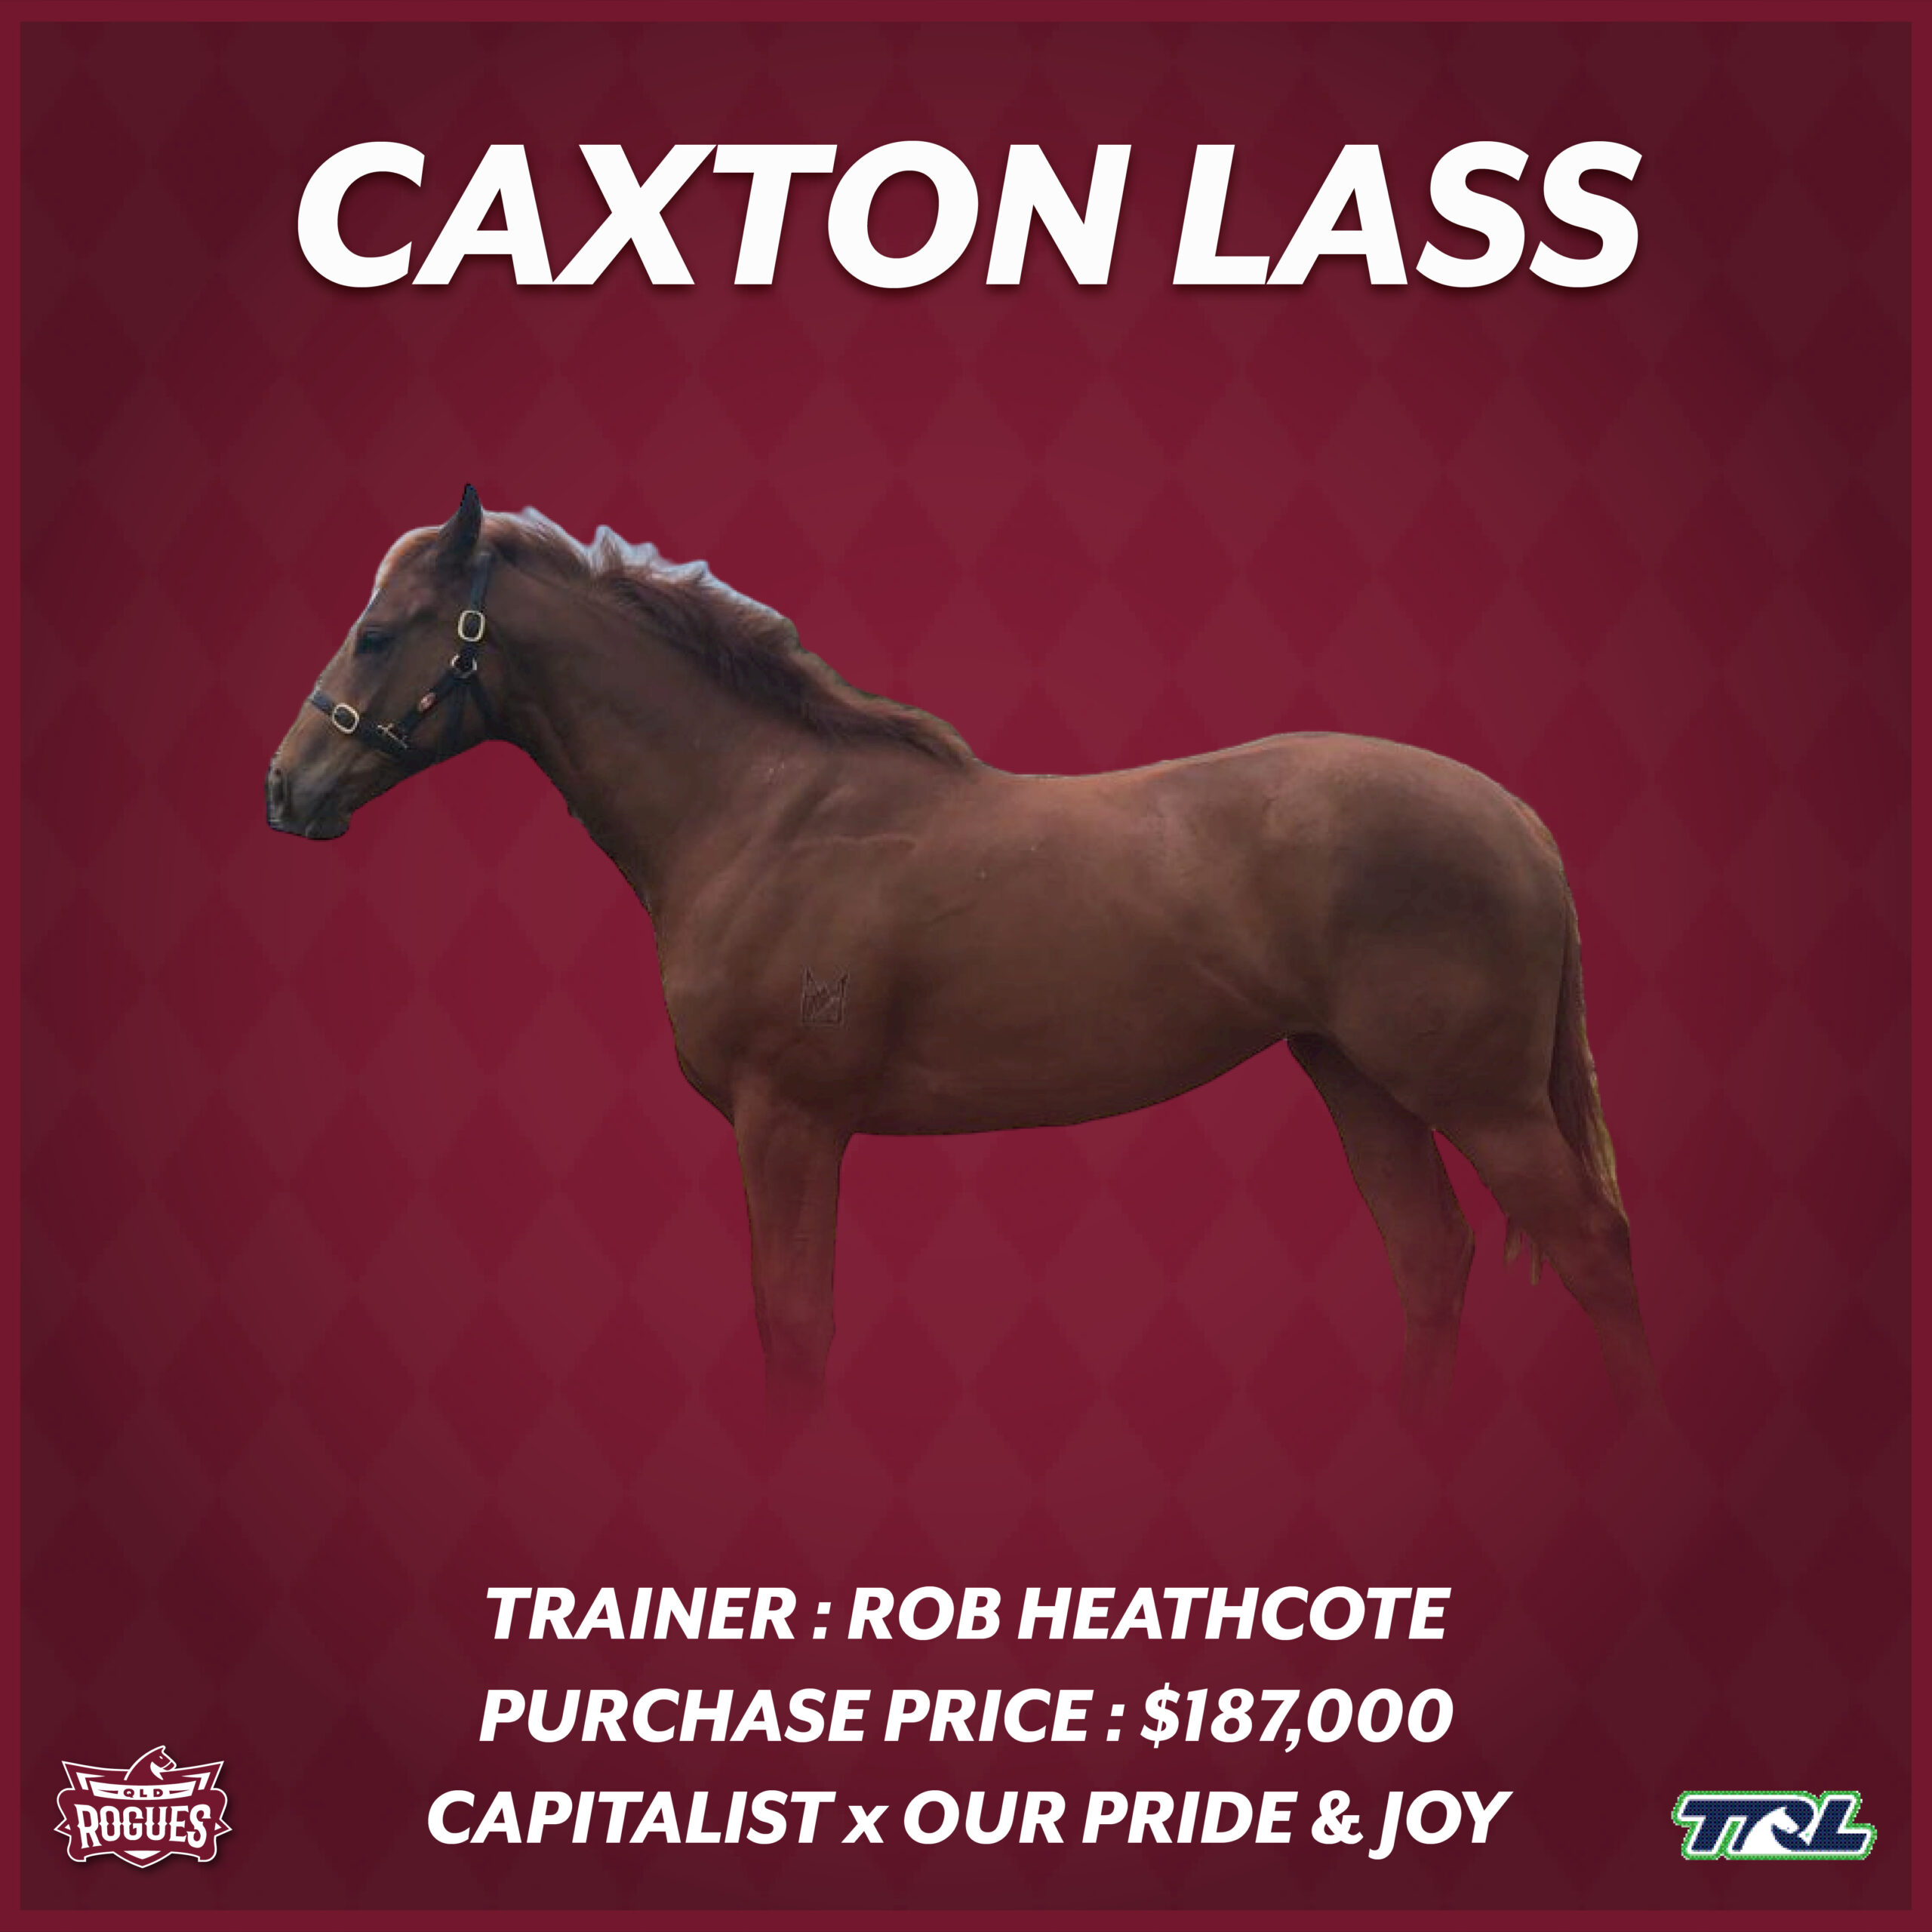 Caxton Lass racehorse